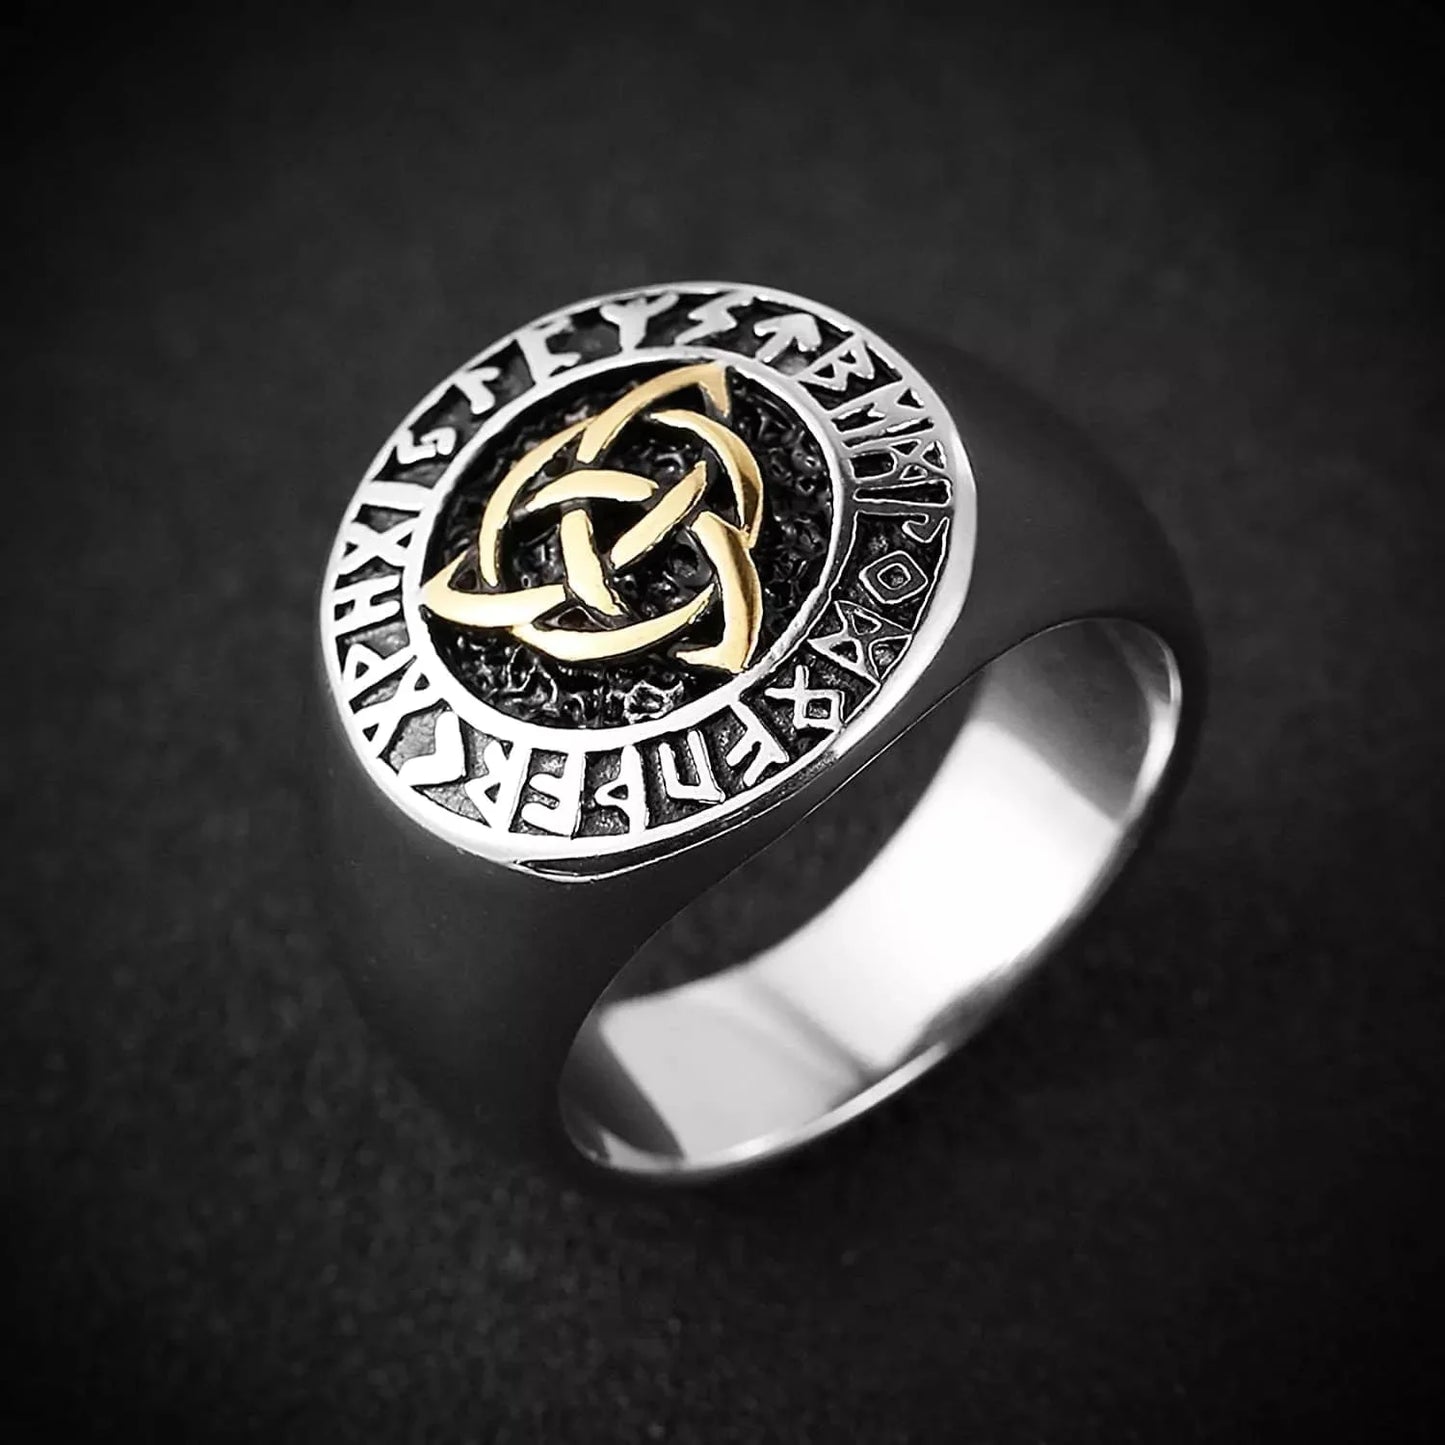 THE MEN THING Trinity Knot Viking Rune Ring for Men Luxury Pure Titanium Steel Ring Jewelry for Men & Boys (17)